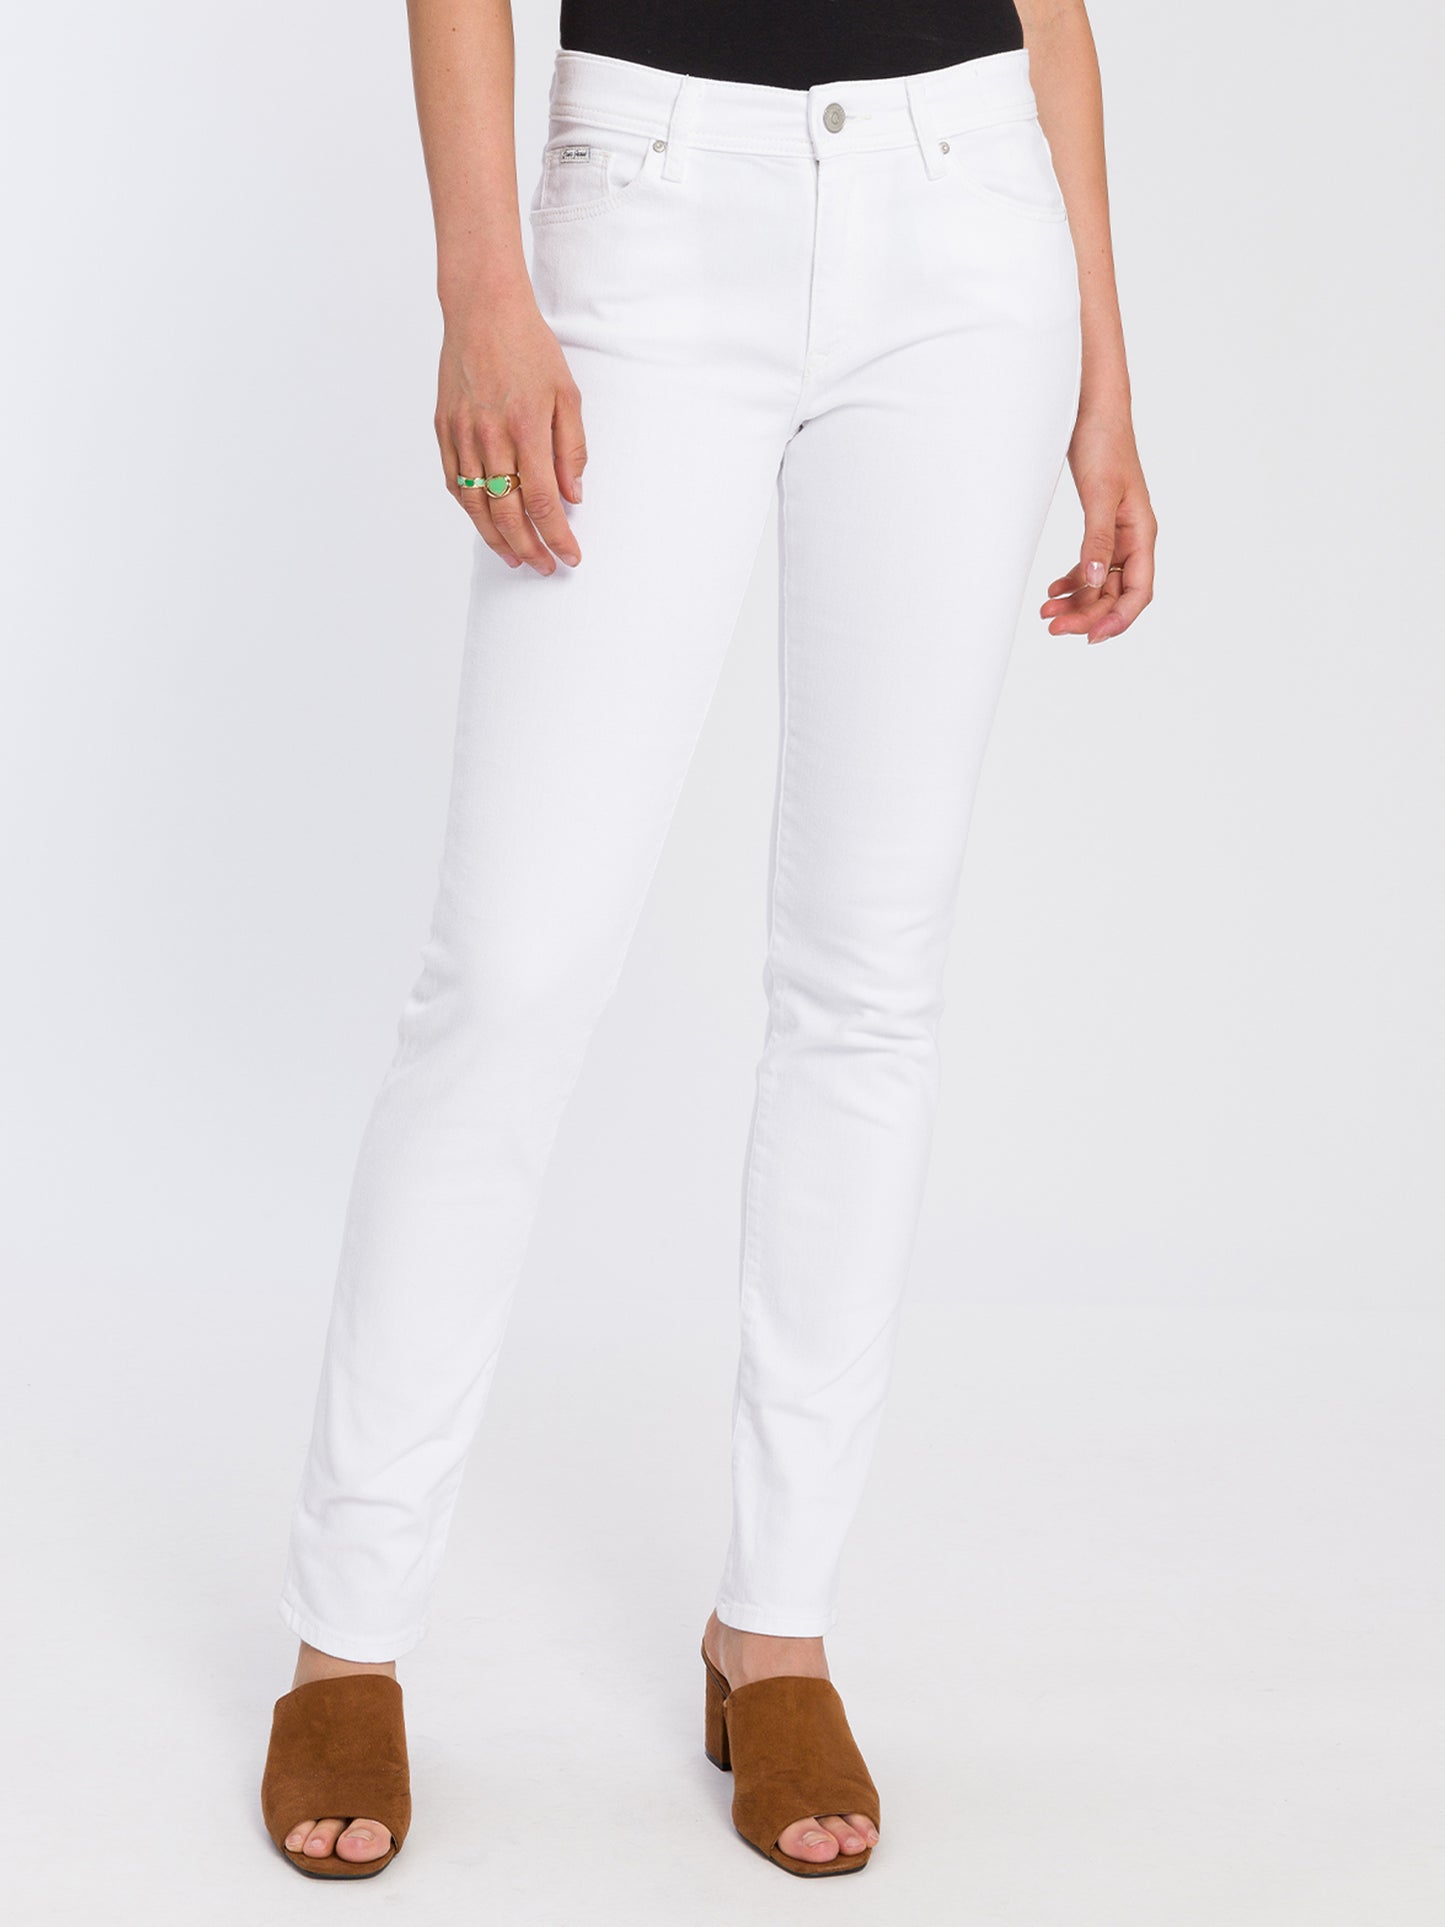 Anya women's jeans slim fit high waist white